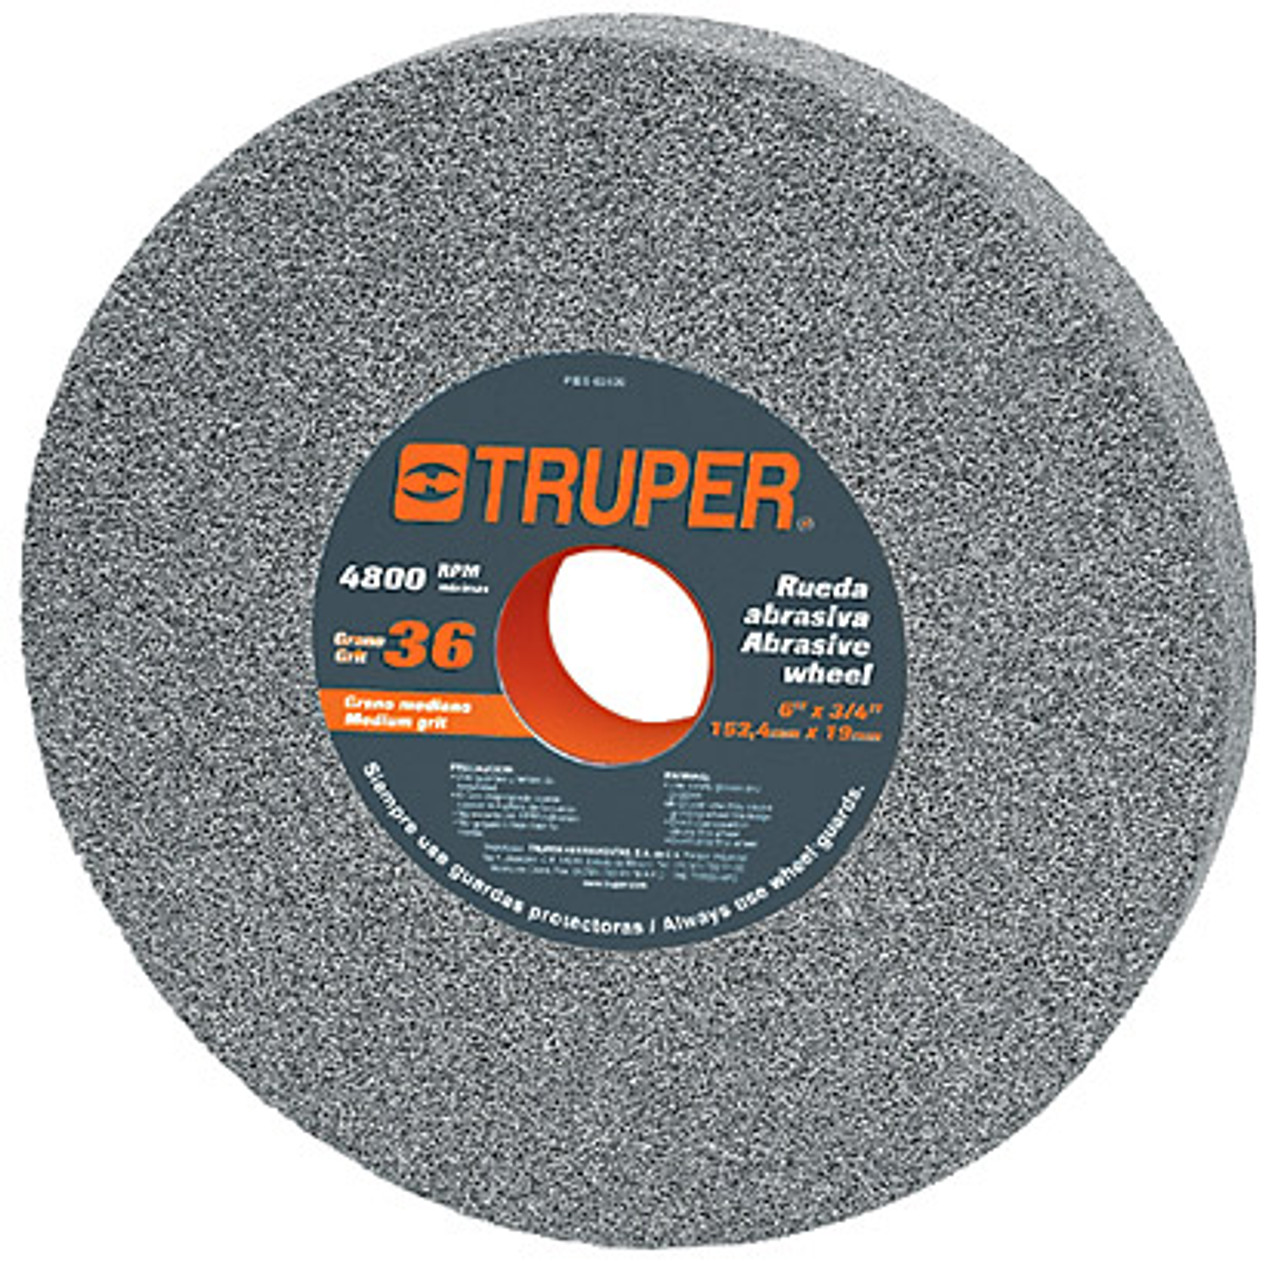 Truper 6x3/4" Grit 60 Grinding Wheel #16349